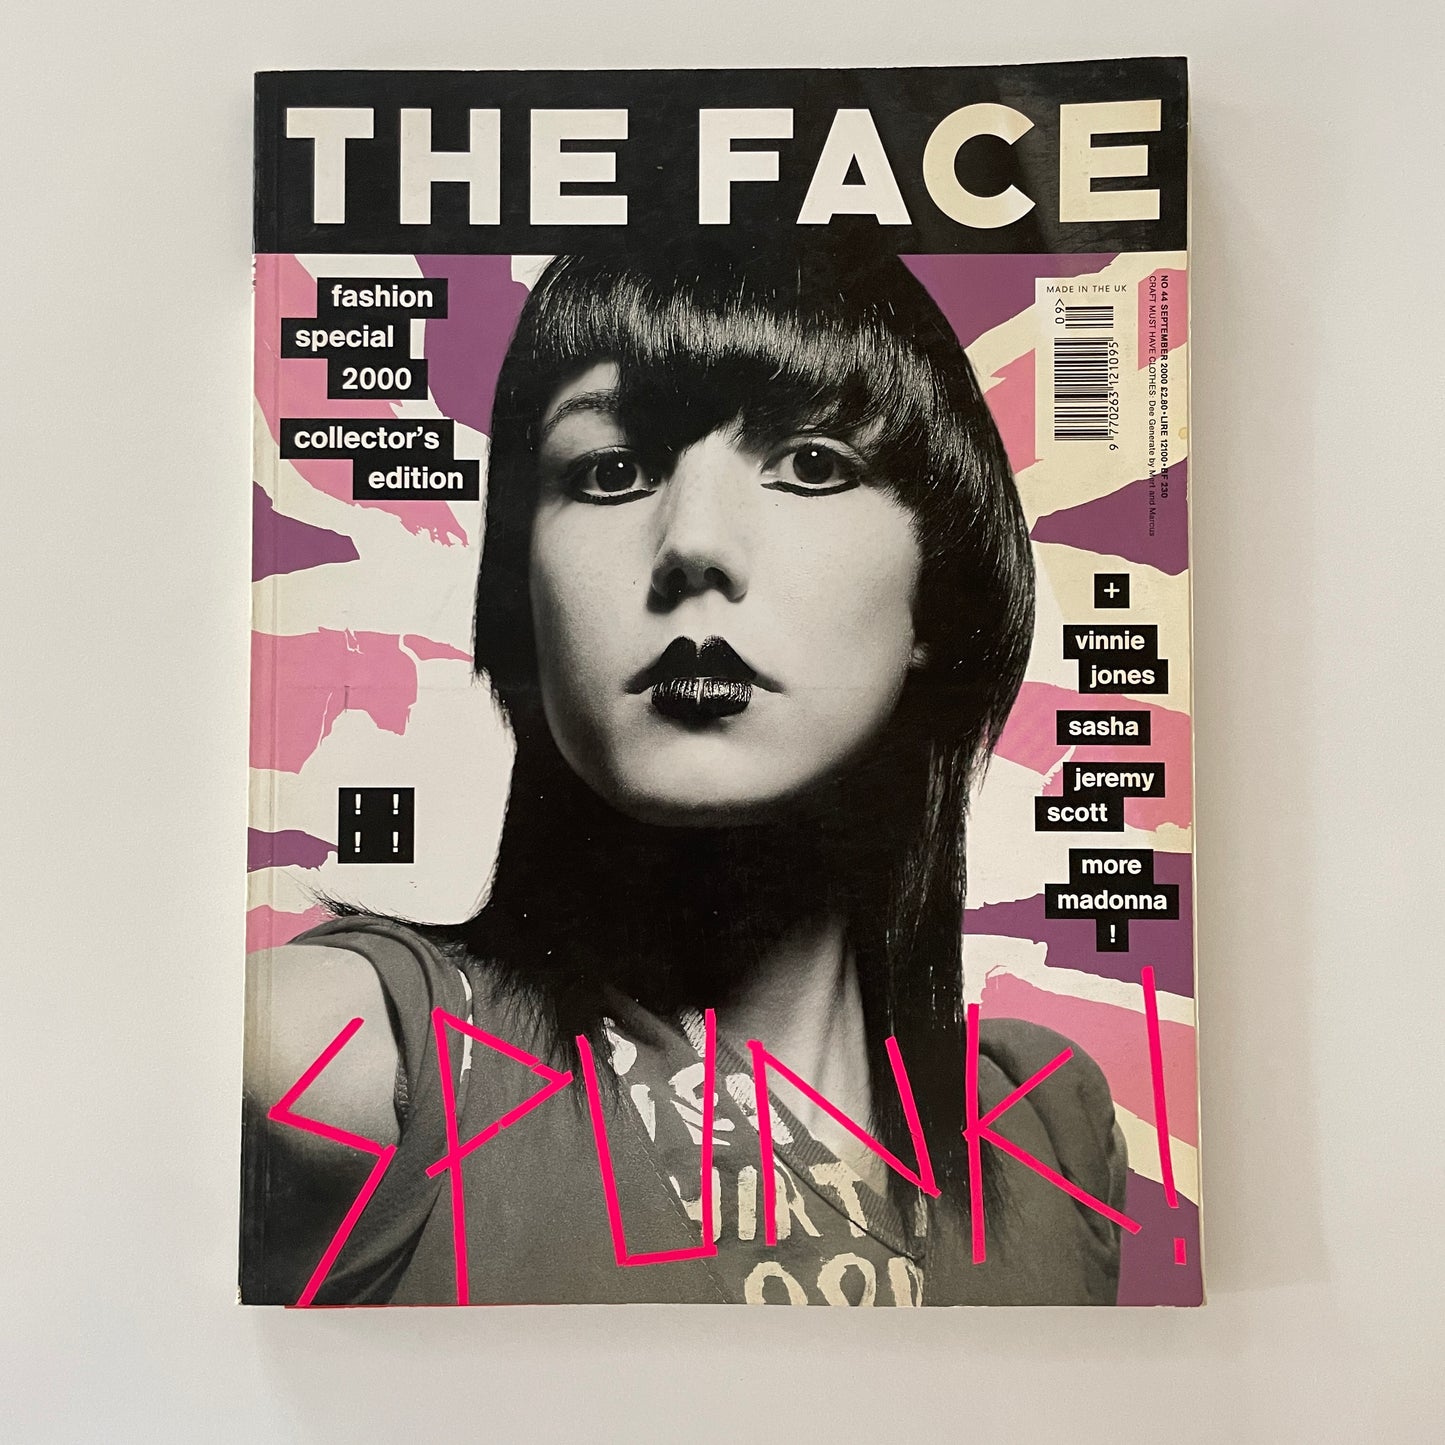 The Face No.44 - September 2000